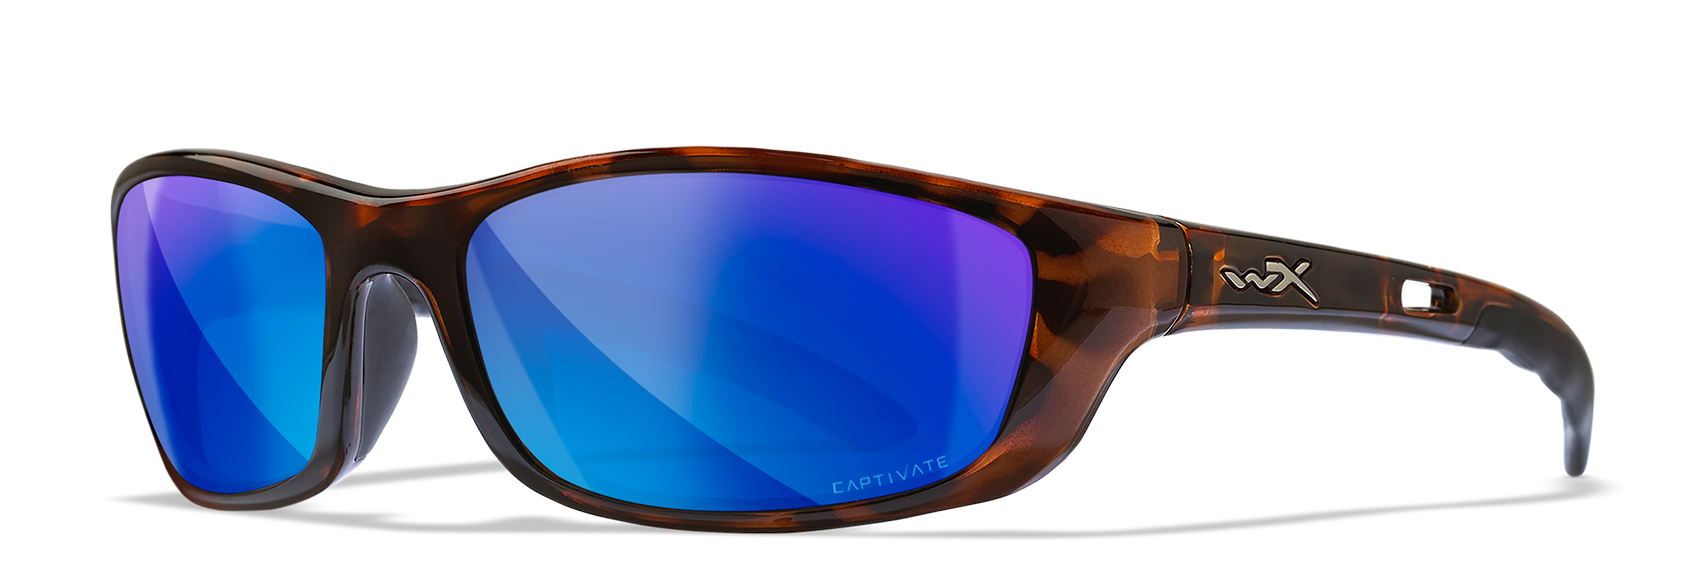 Wiley X P17 Gloss Demi Polycarbonate Sunglasses